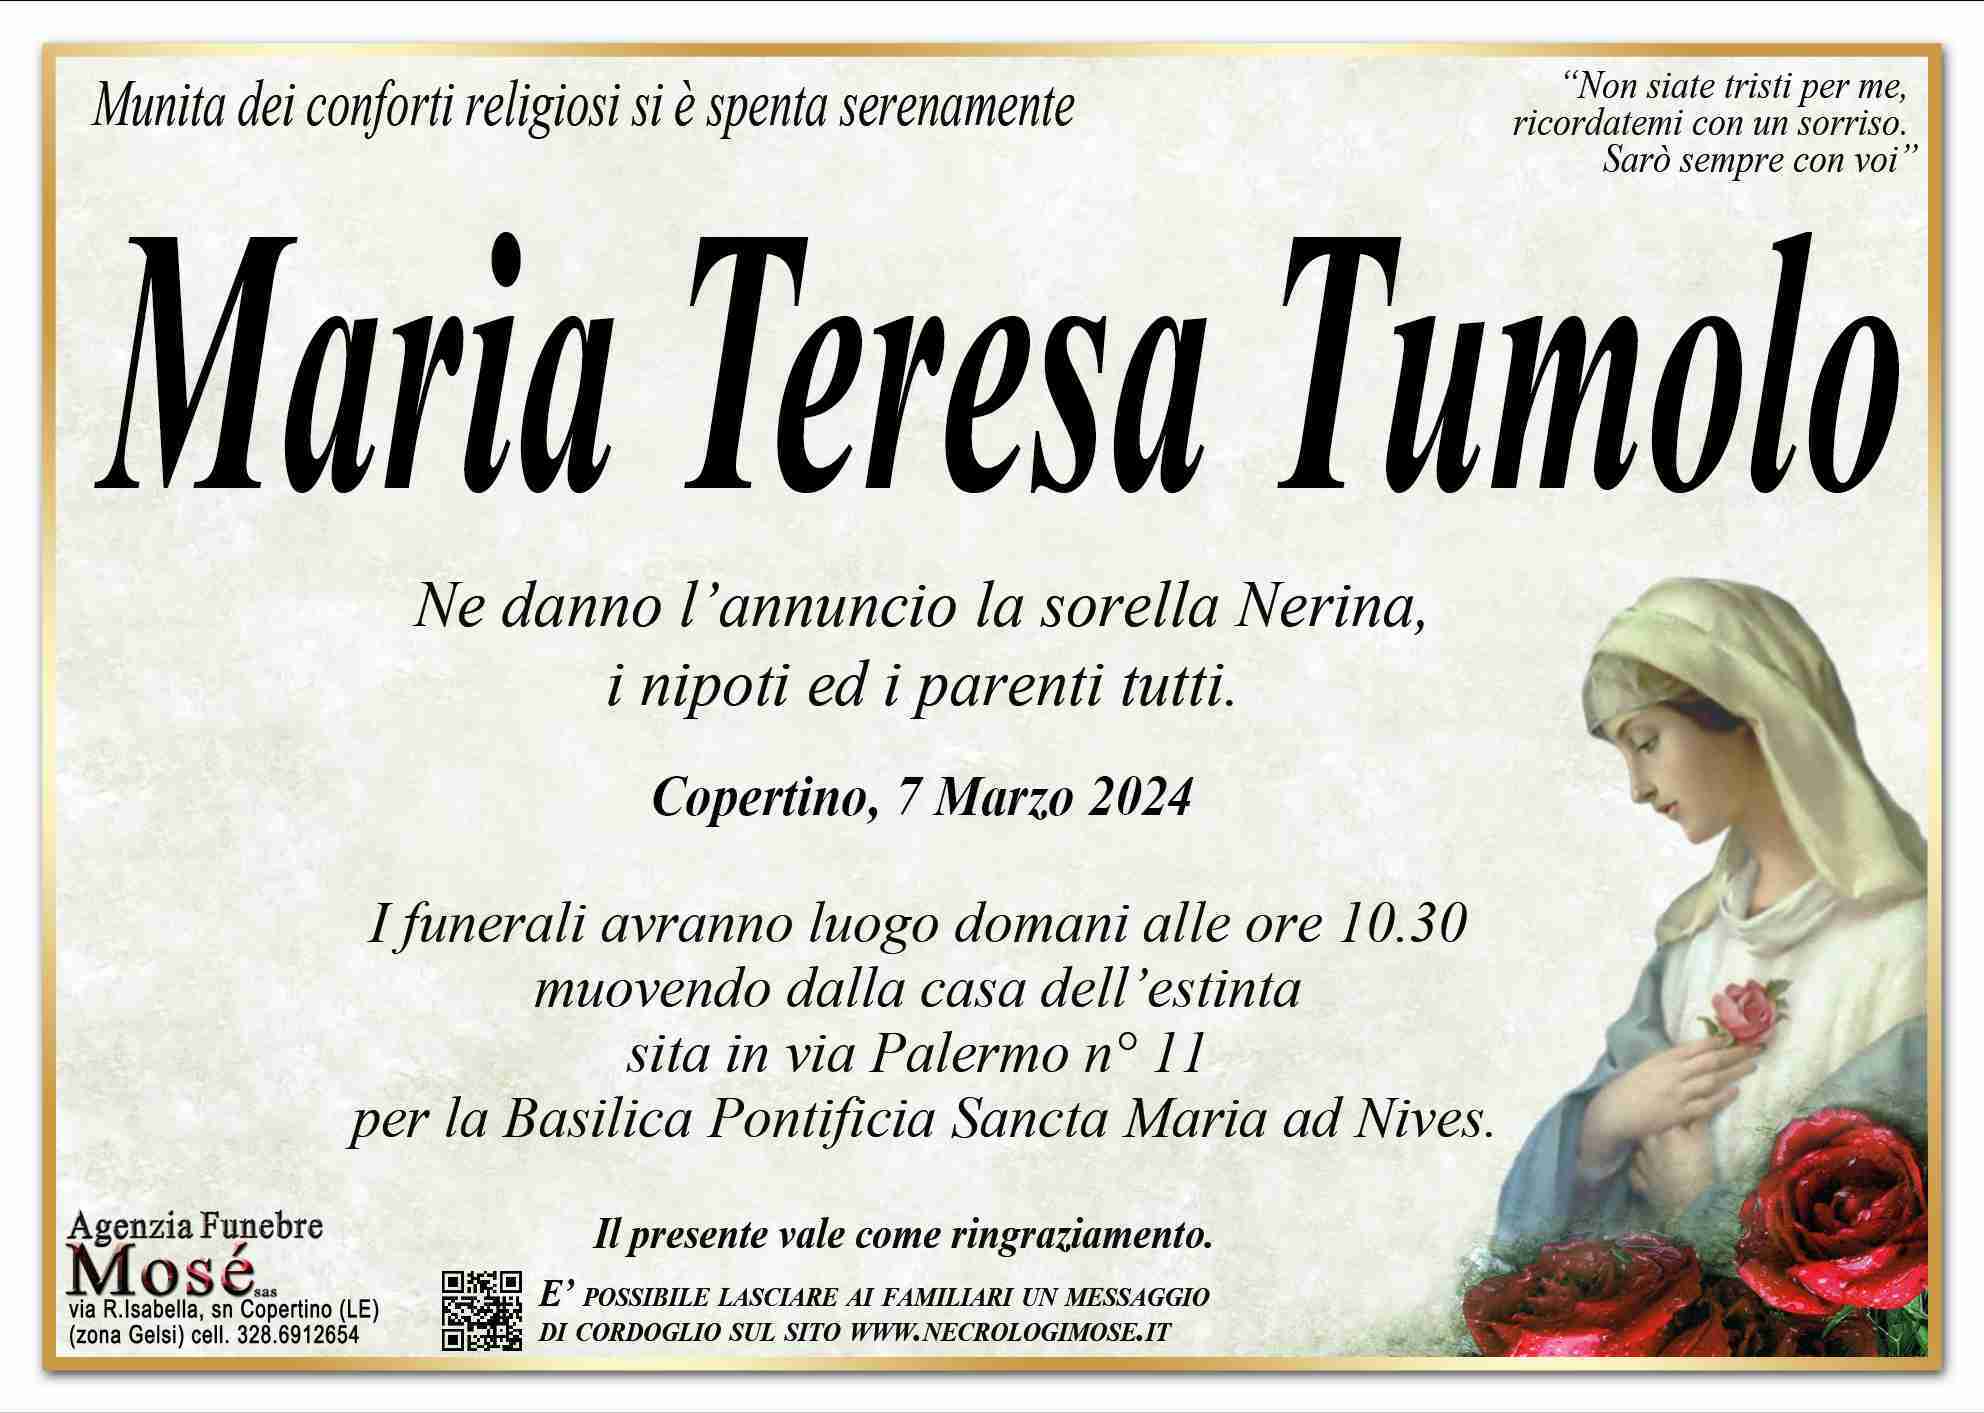 Tumolo Maria Teresa